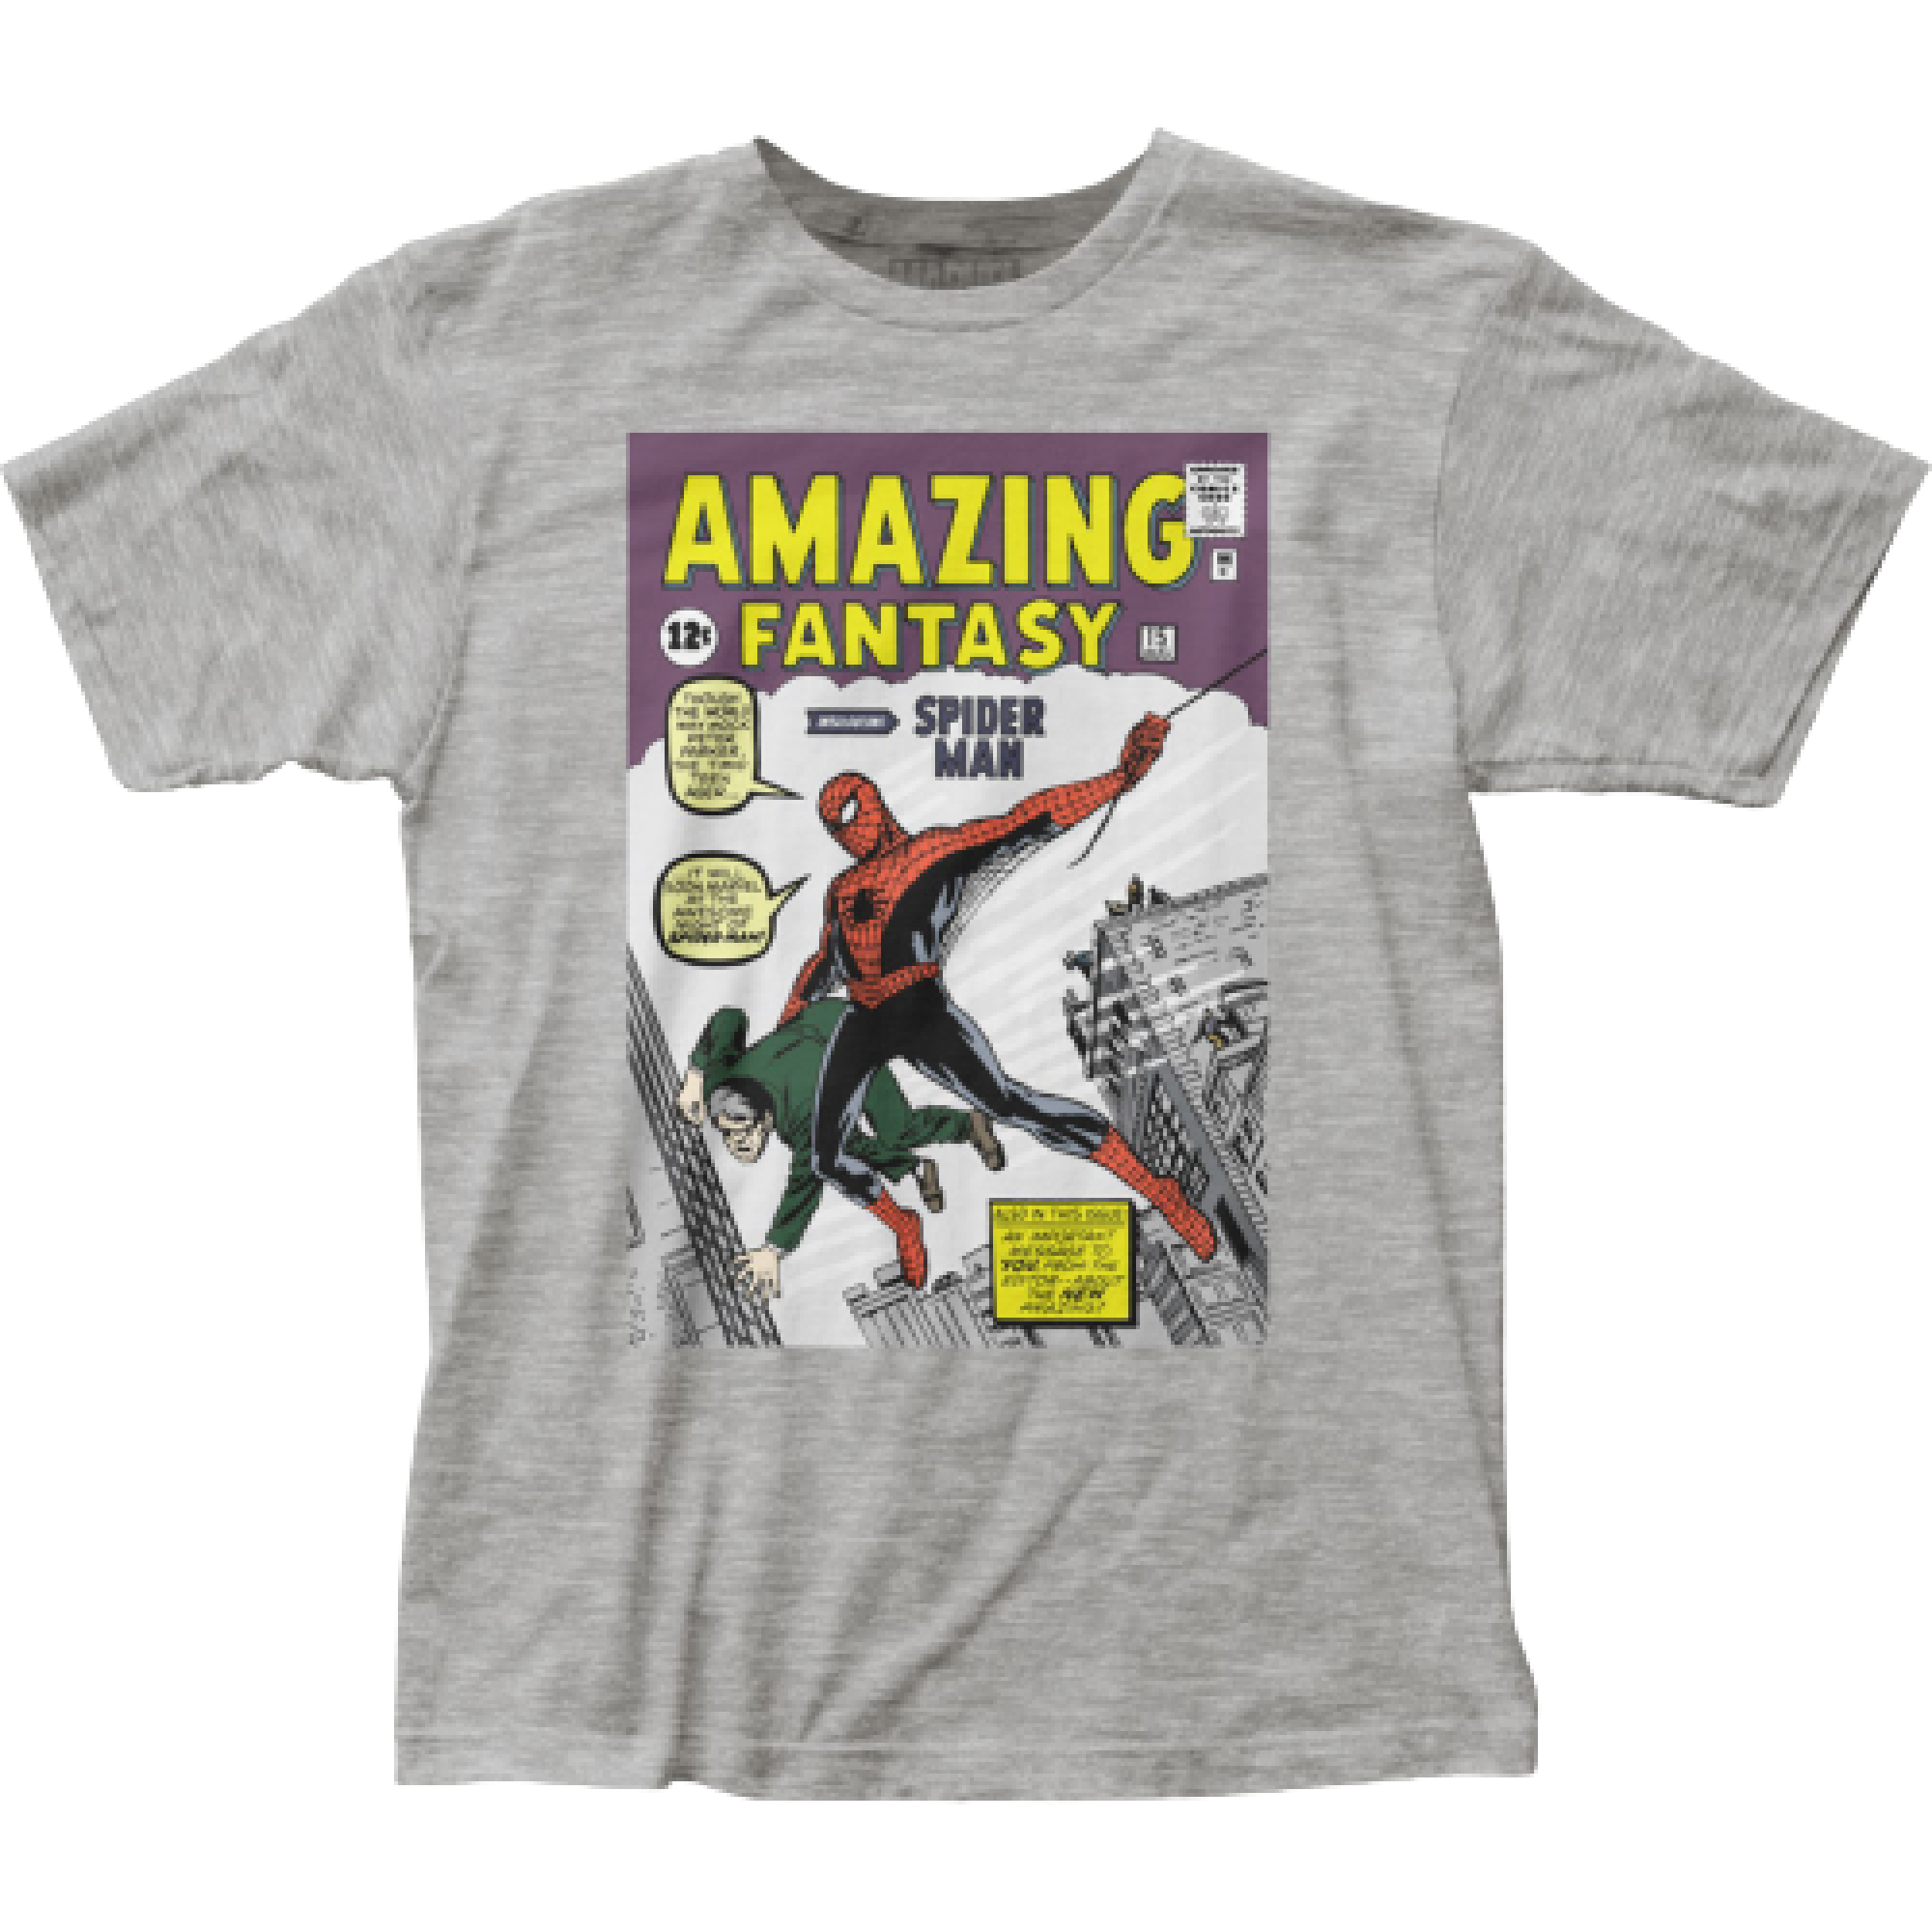 Spider-Man Amazing Fantasy Cover Art T-Shirt Large 